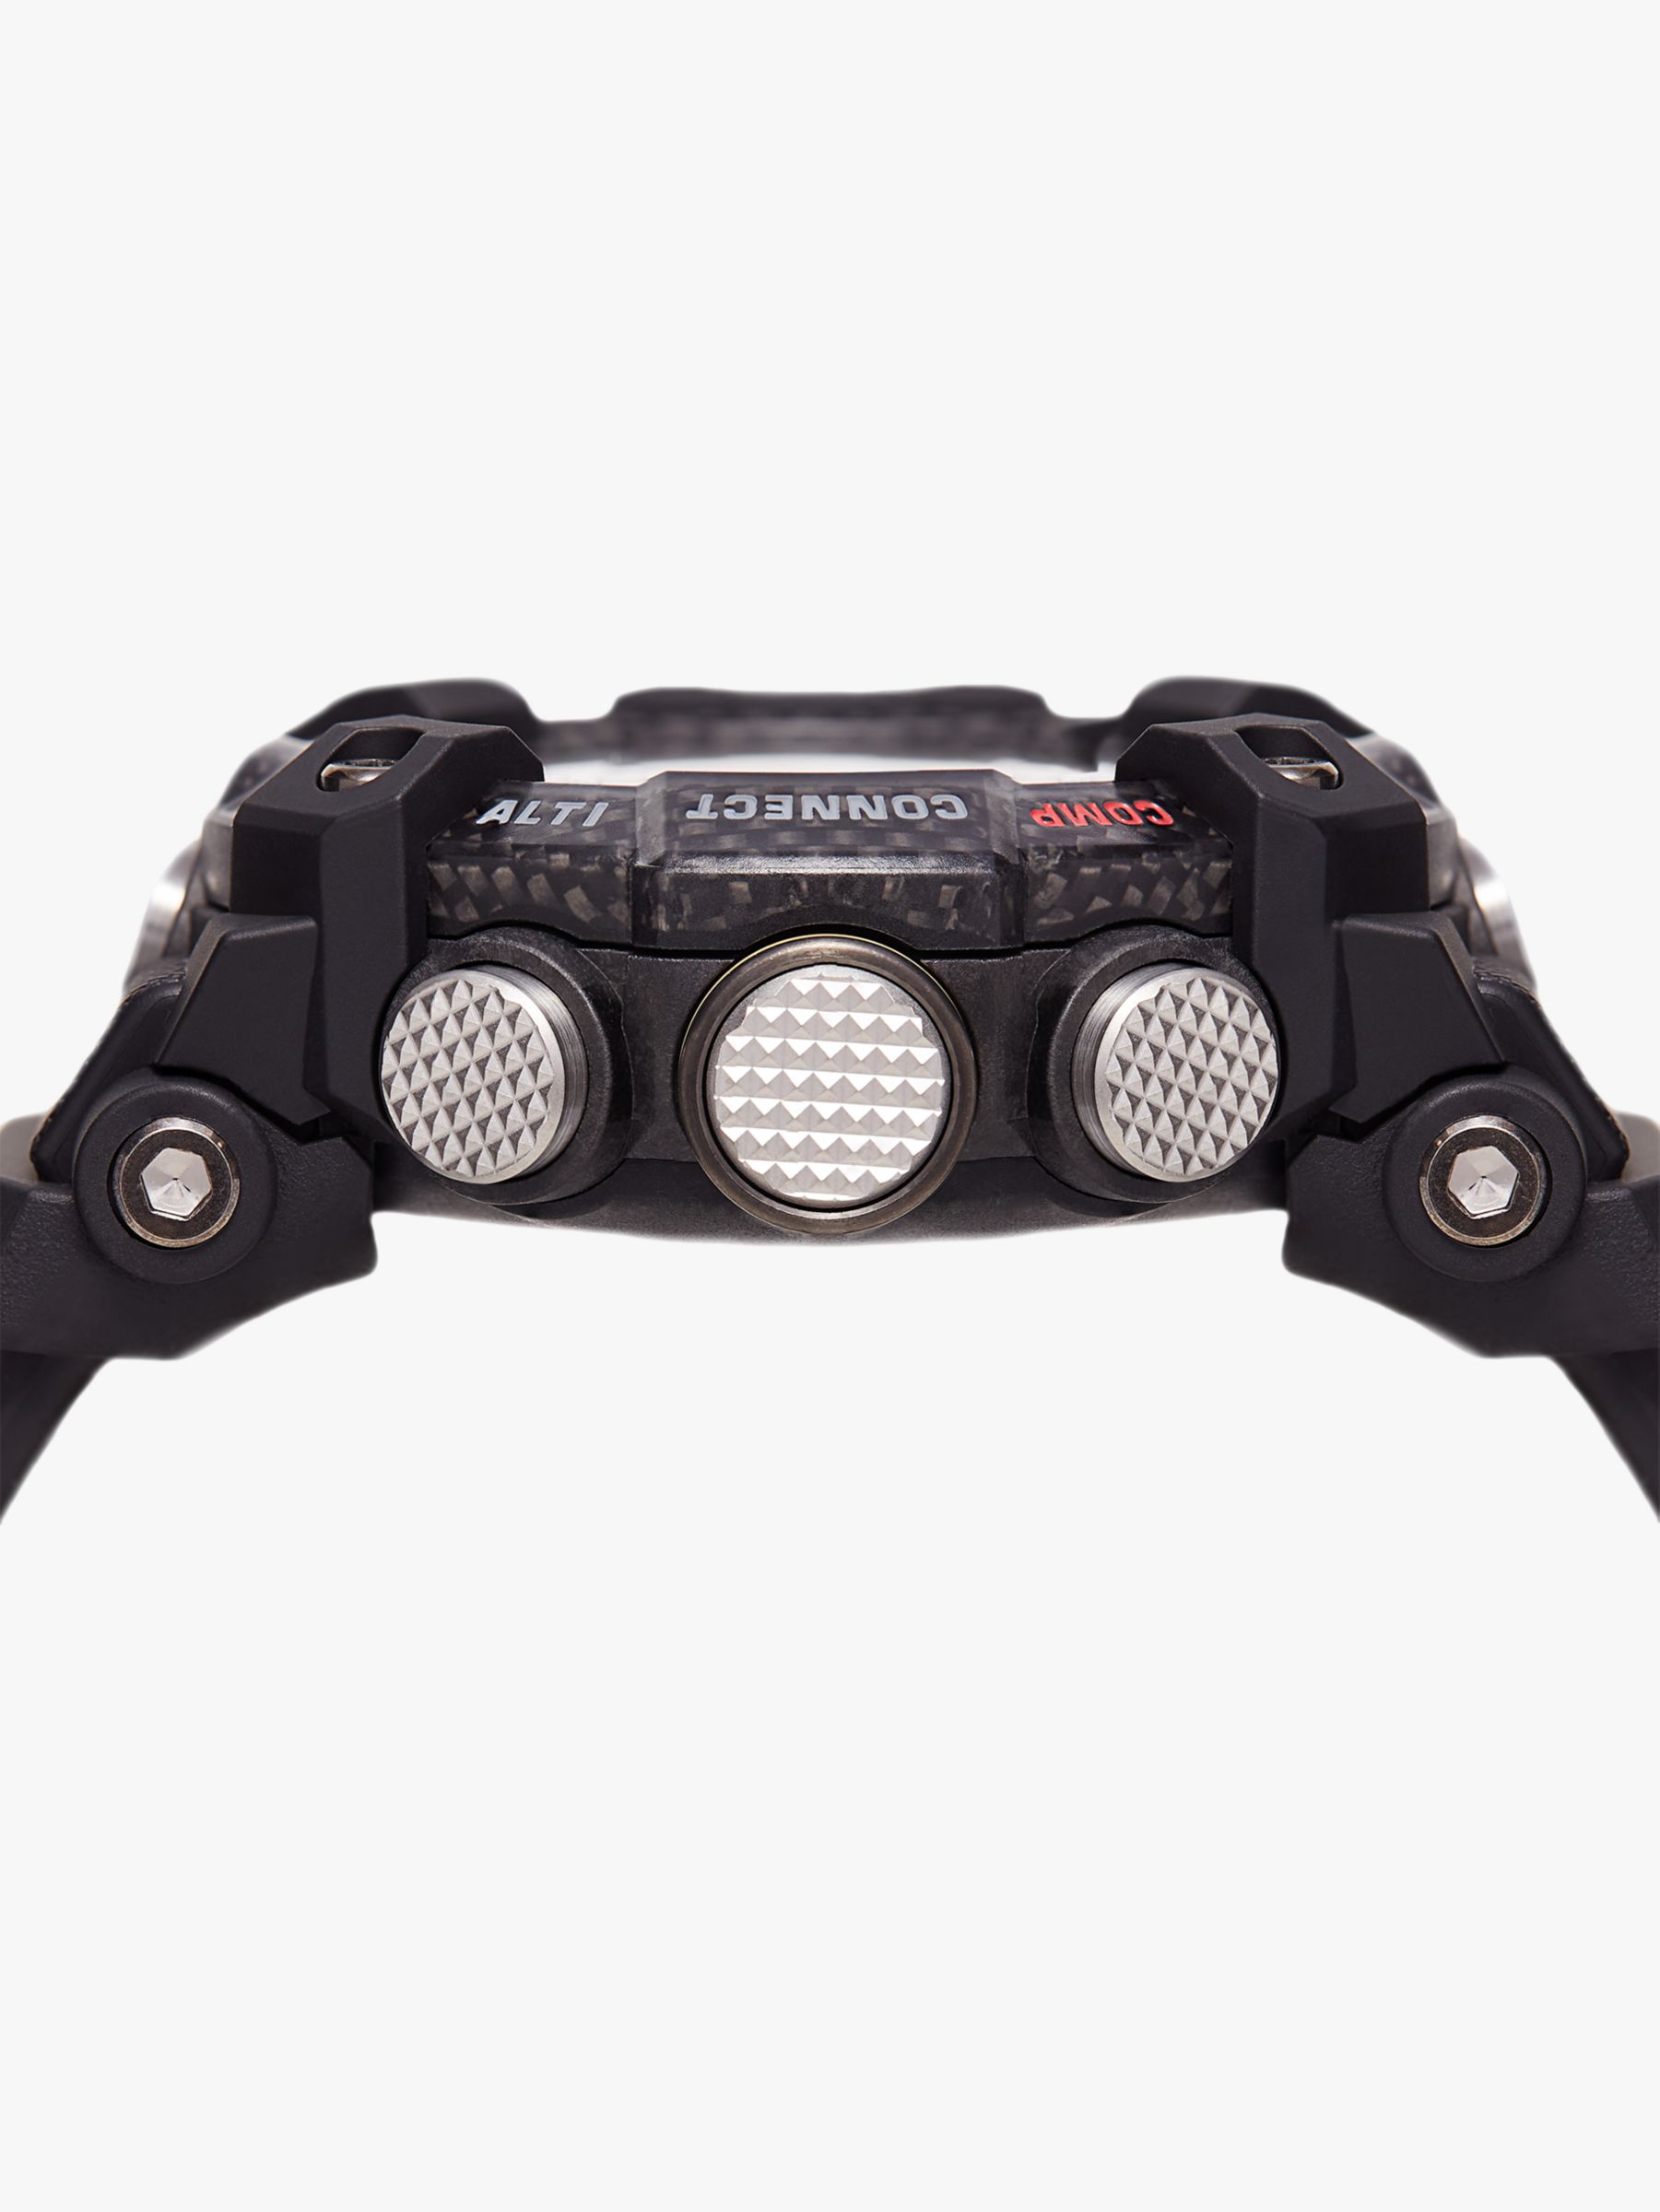 G-Shock Men's Master of G Mudmaster Bluetooth Day Resin Strap Watch, Black GG-B100-1AER